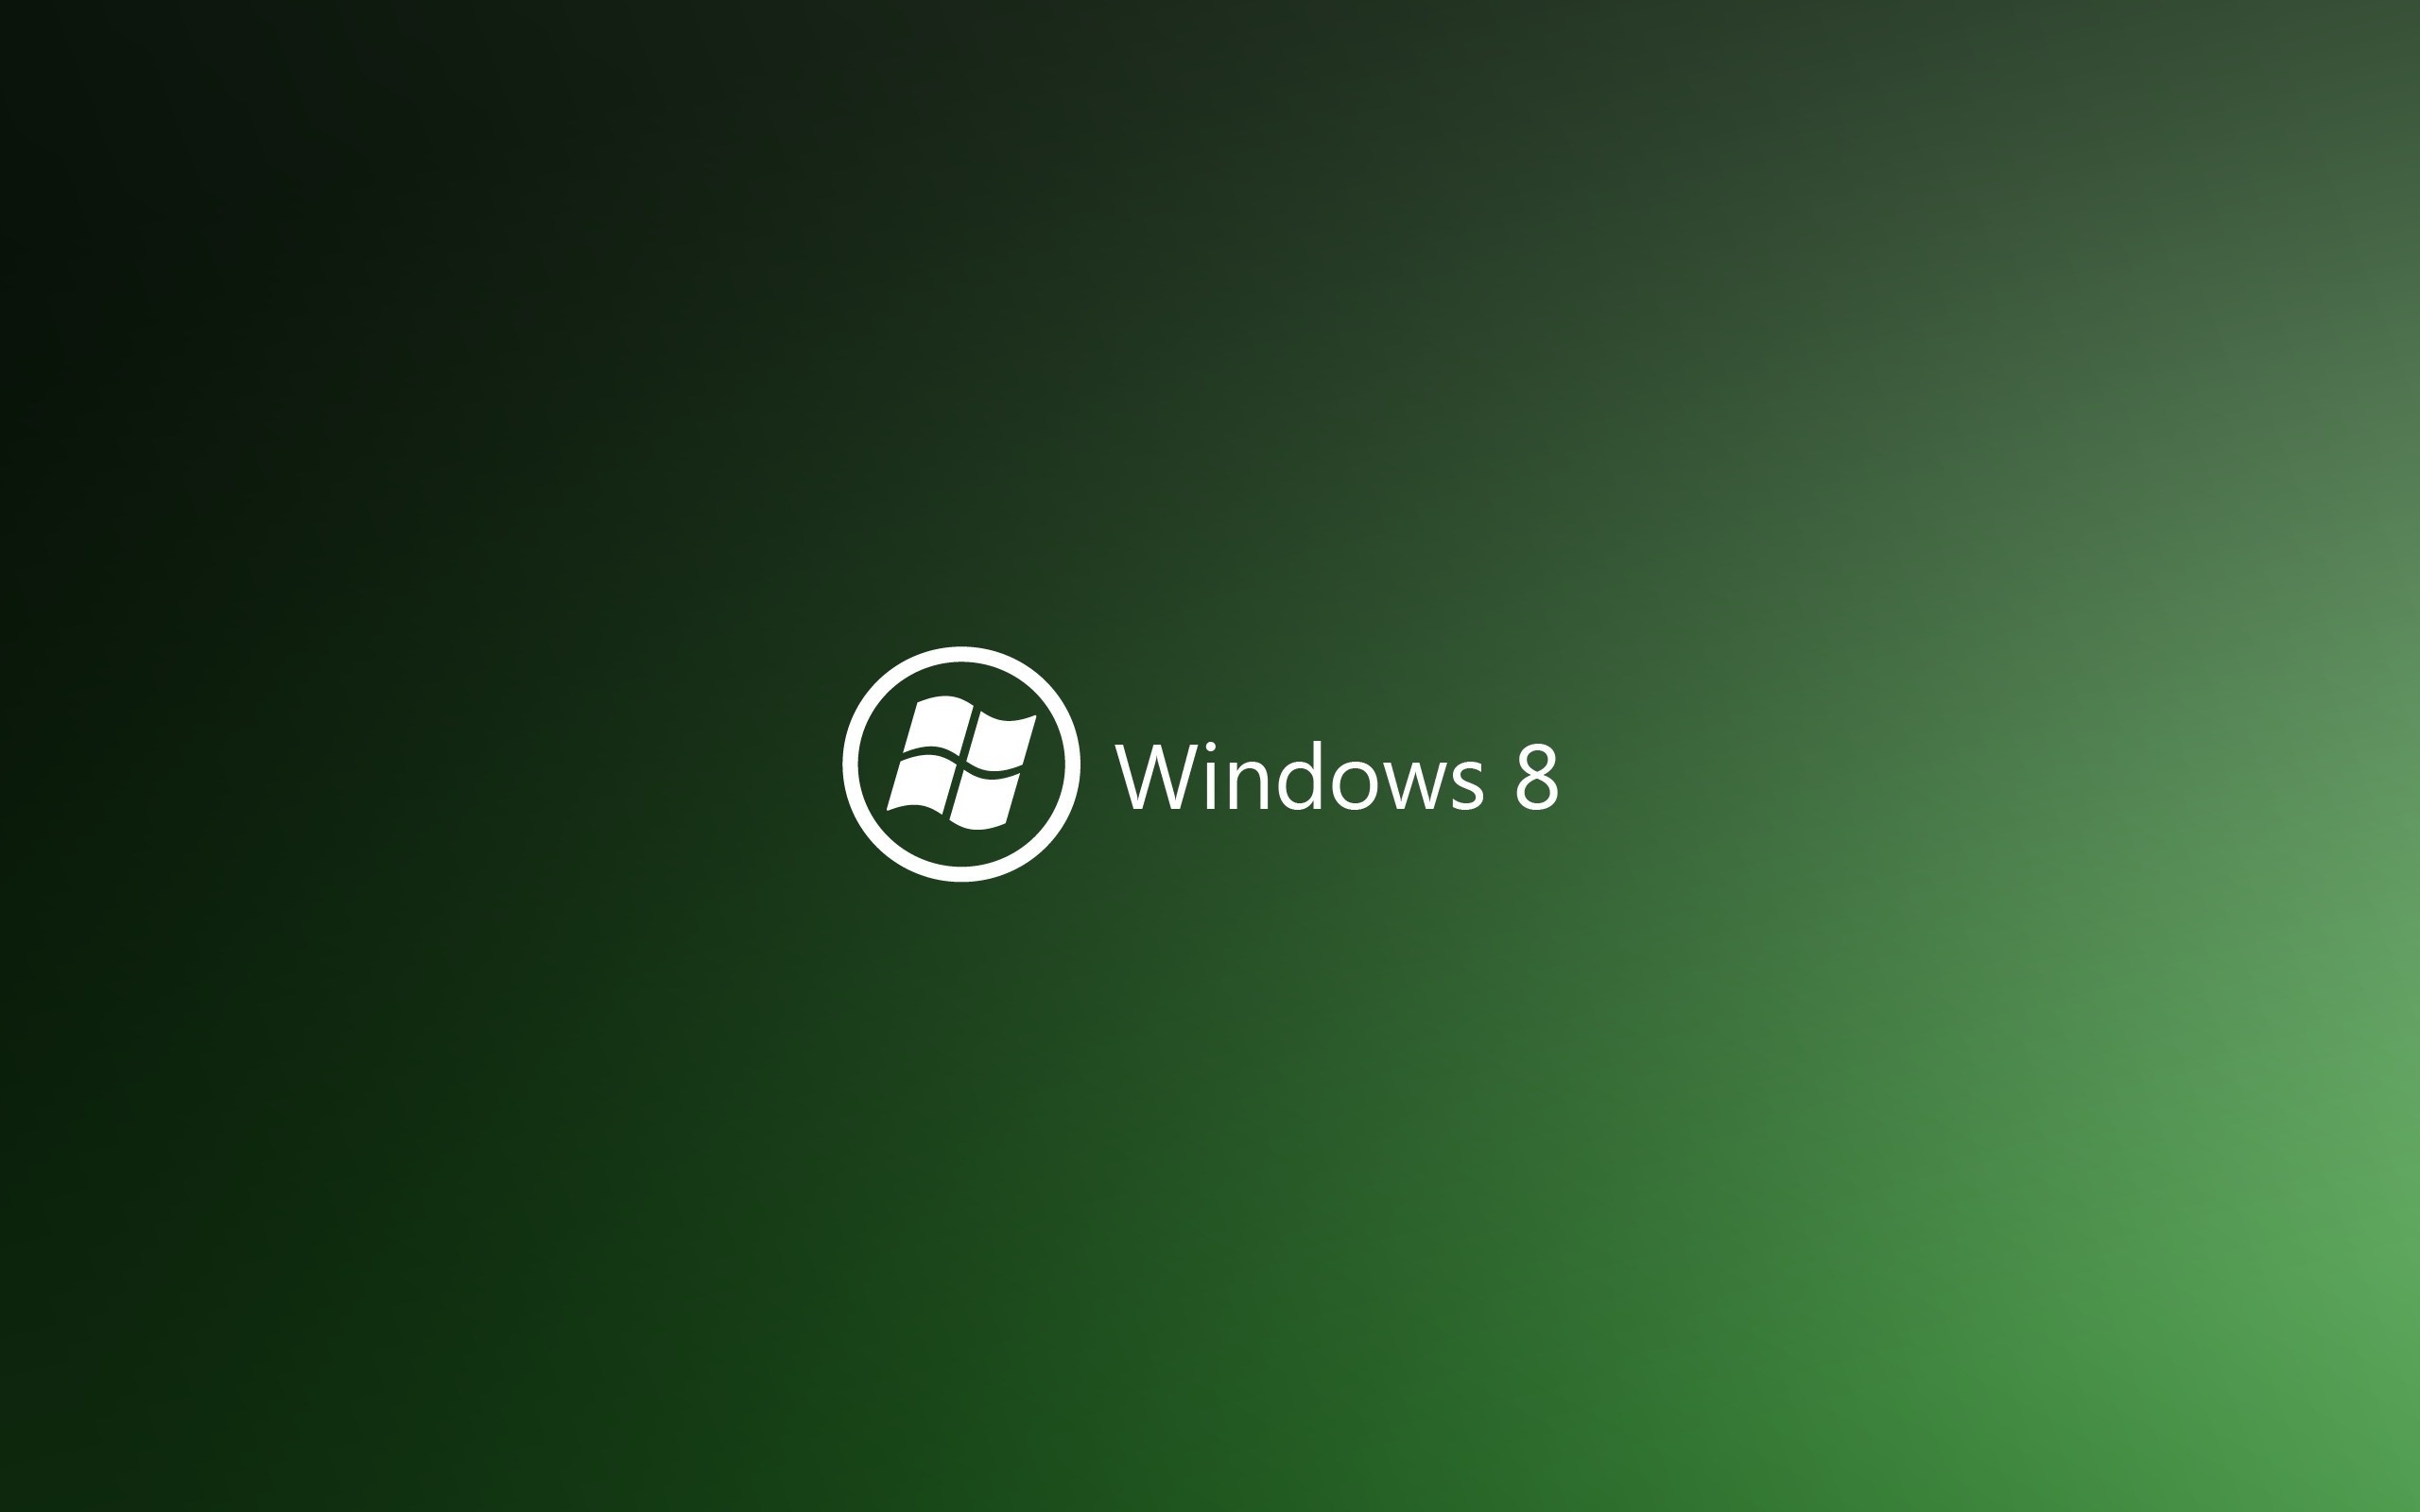 логотип, windows 8, зеленый фон, минимализм, заставки, надпись, обои, Logo, green background, minimalism, screensaver, inscription, wallpaper